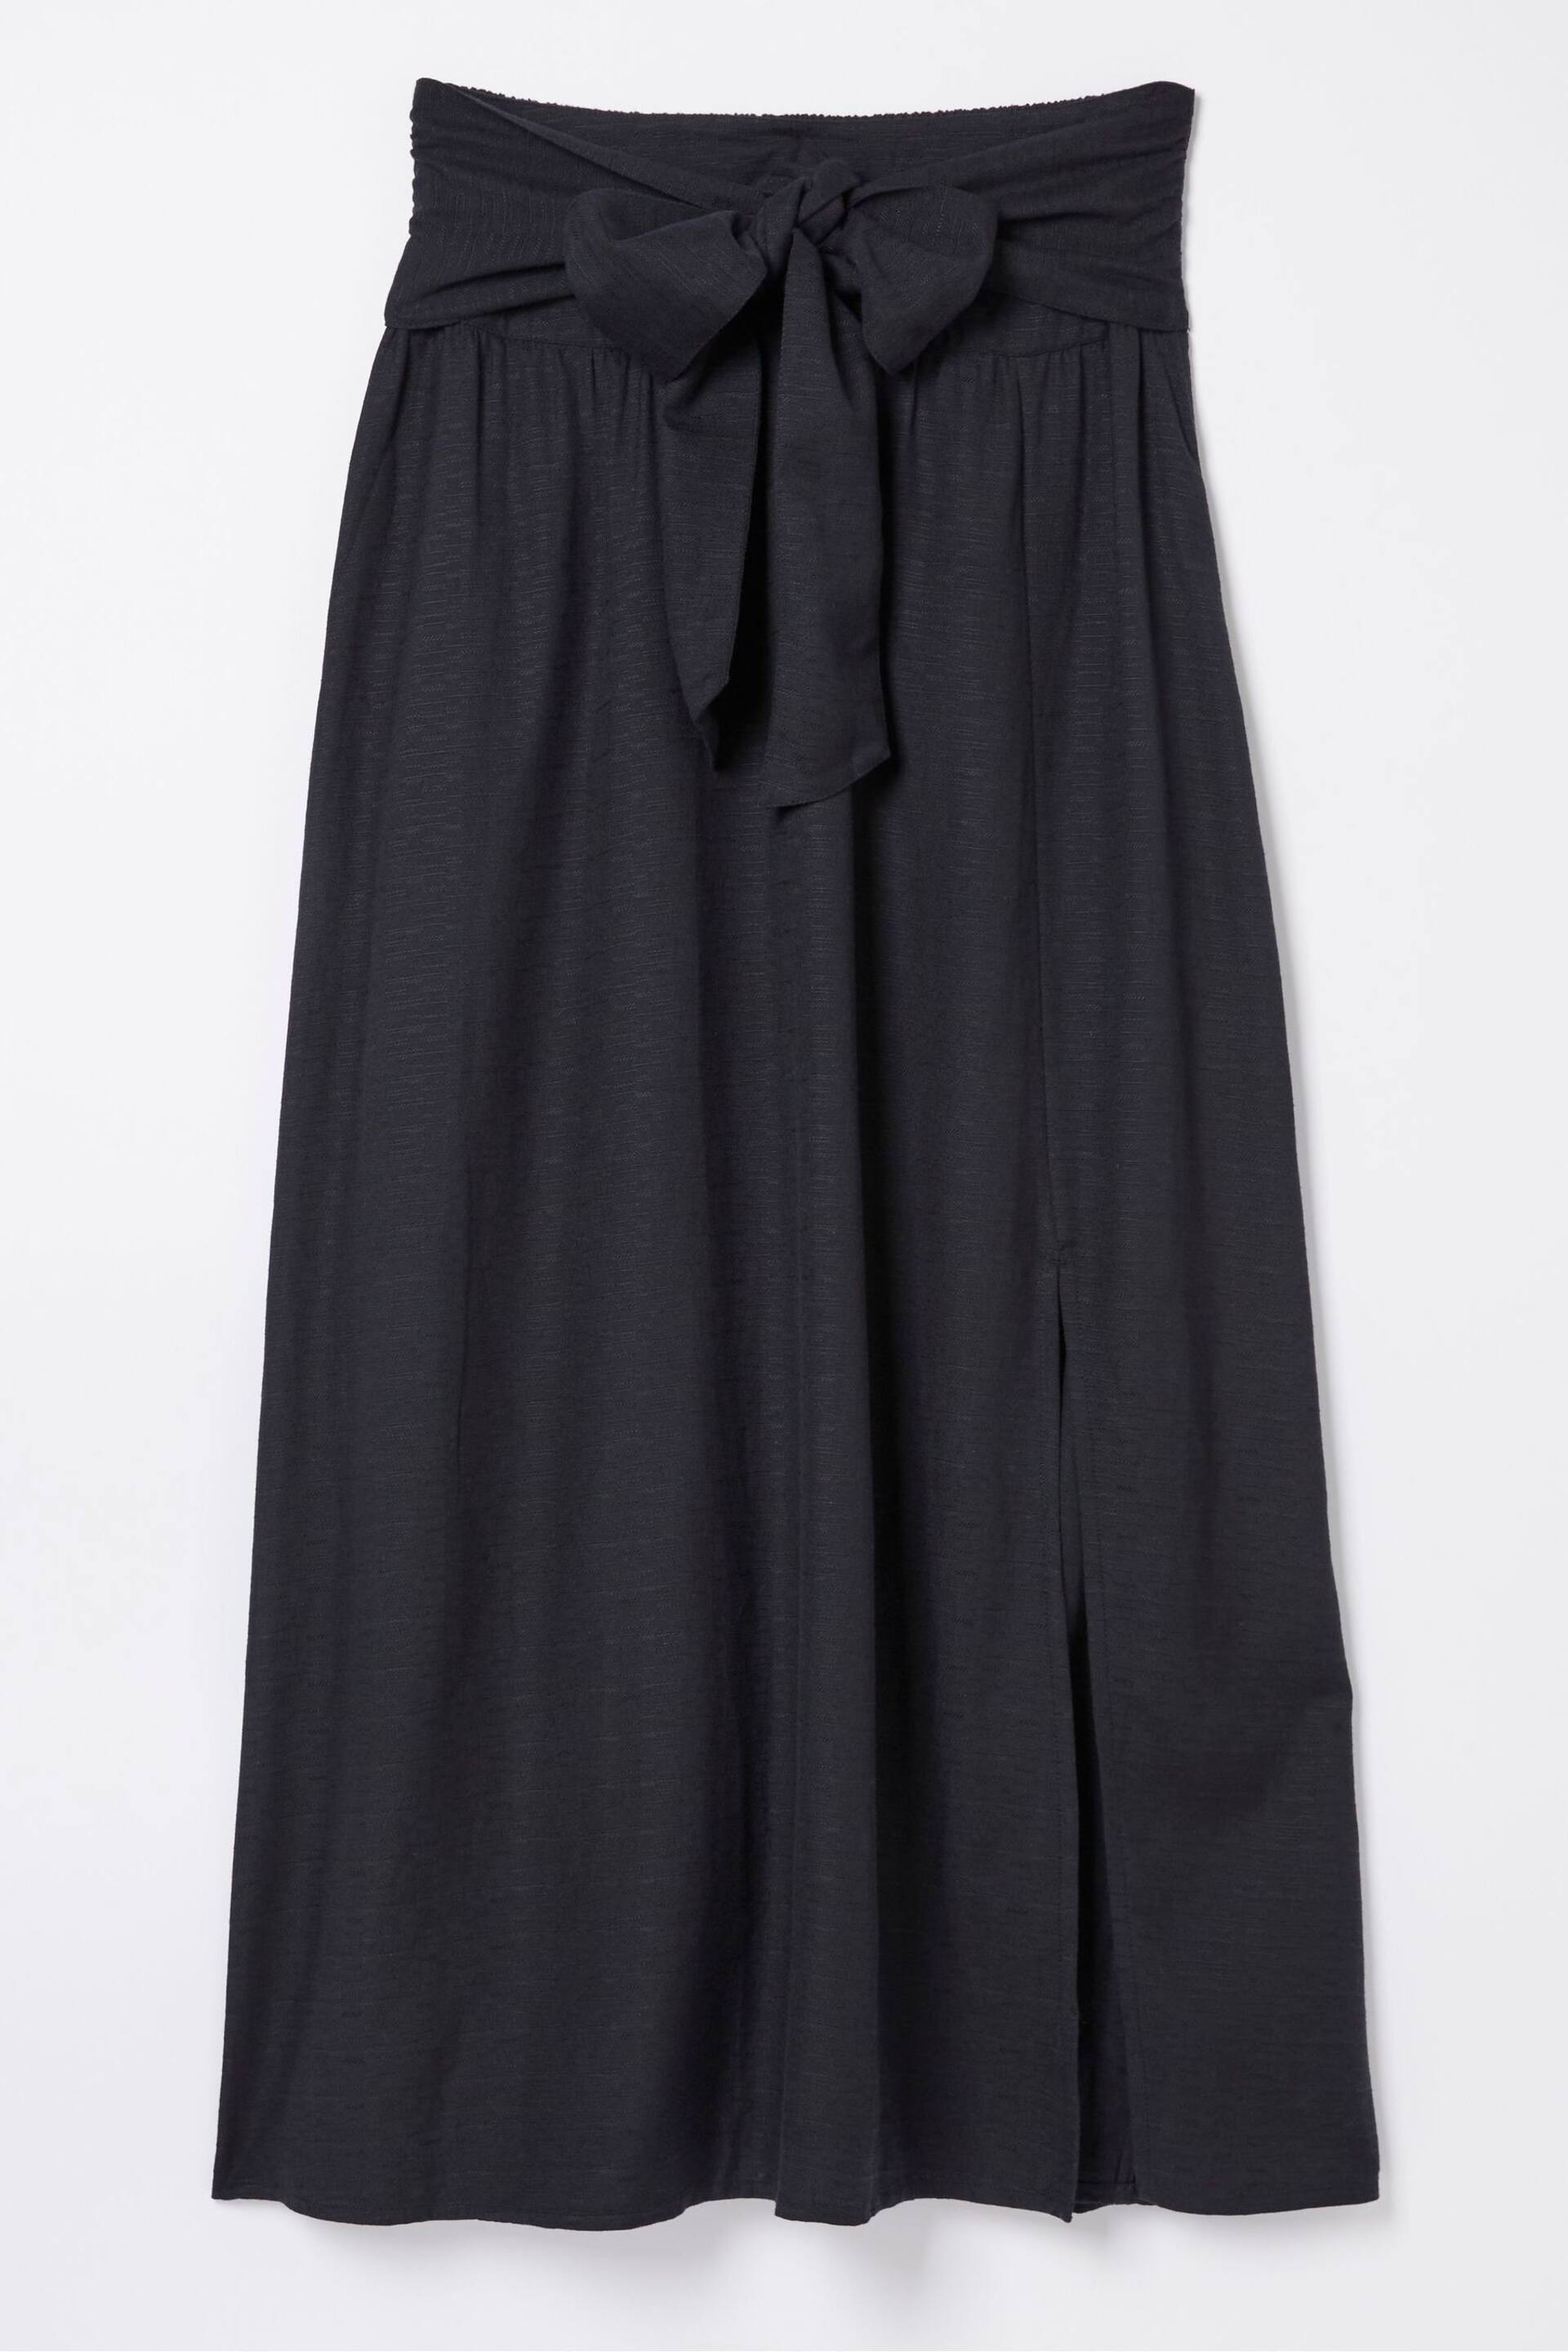 FatFace Black Sascha Midi Skirt - Image 5 of 5